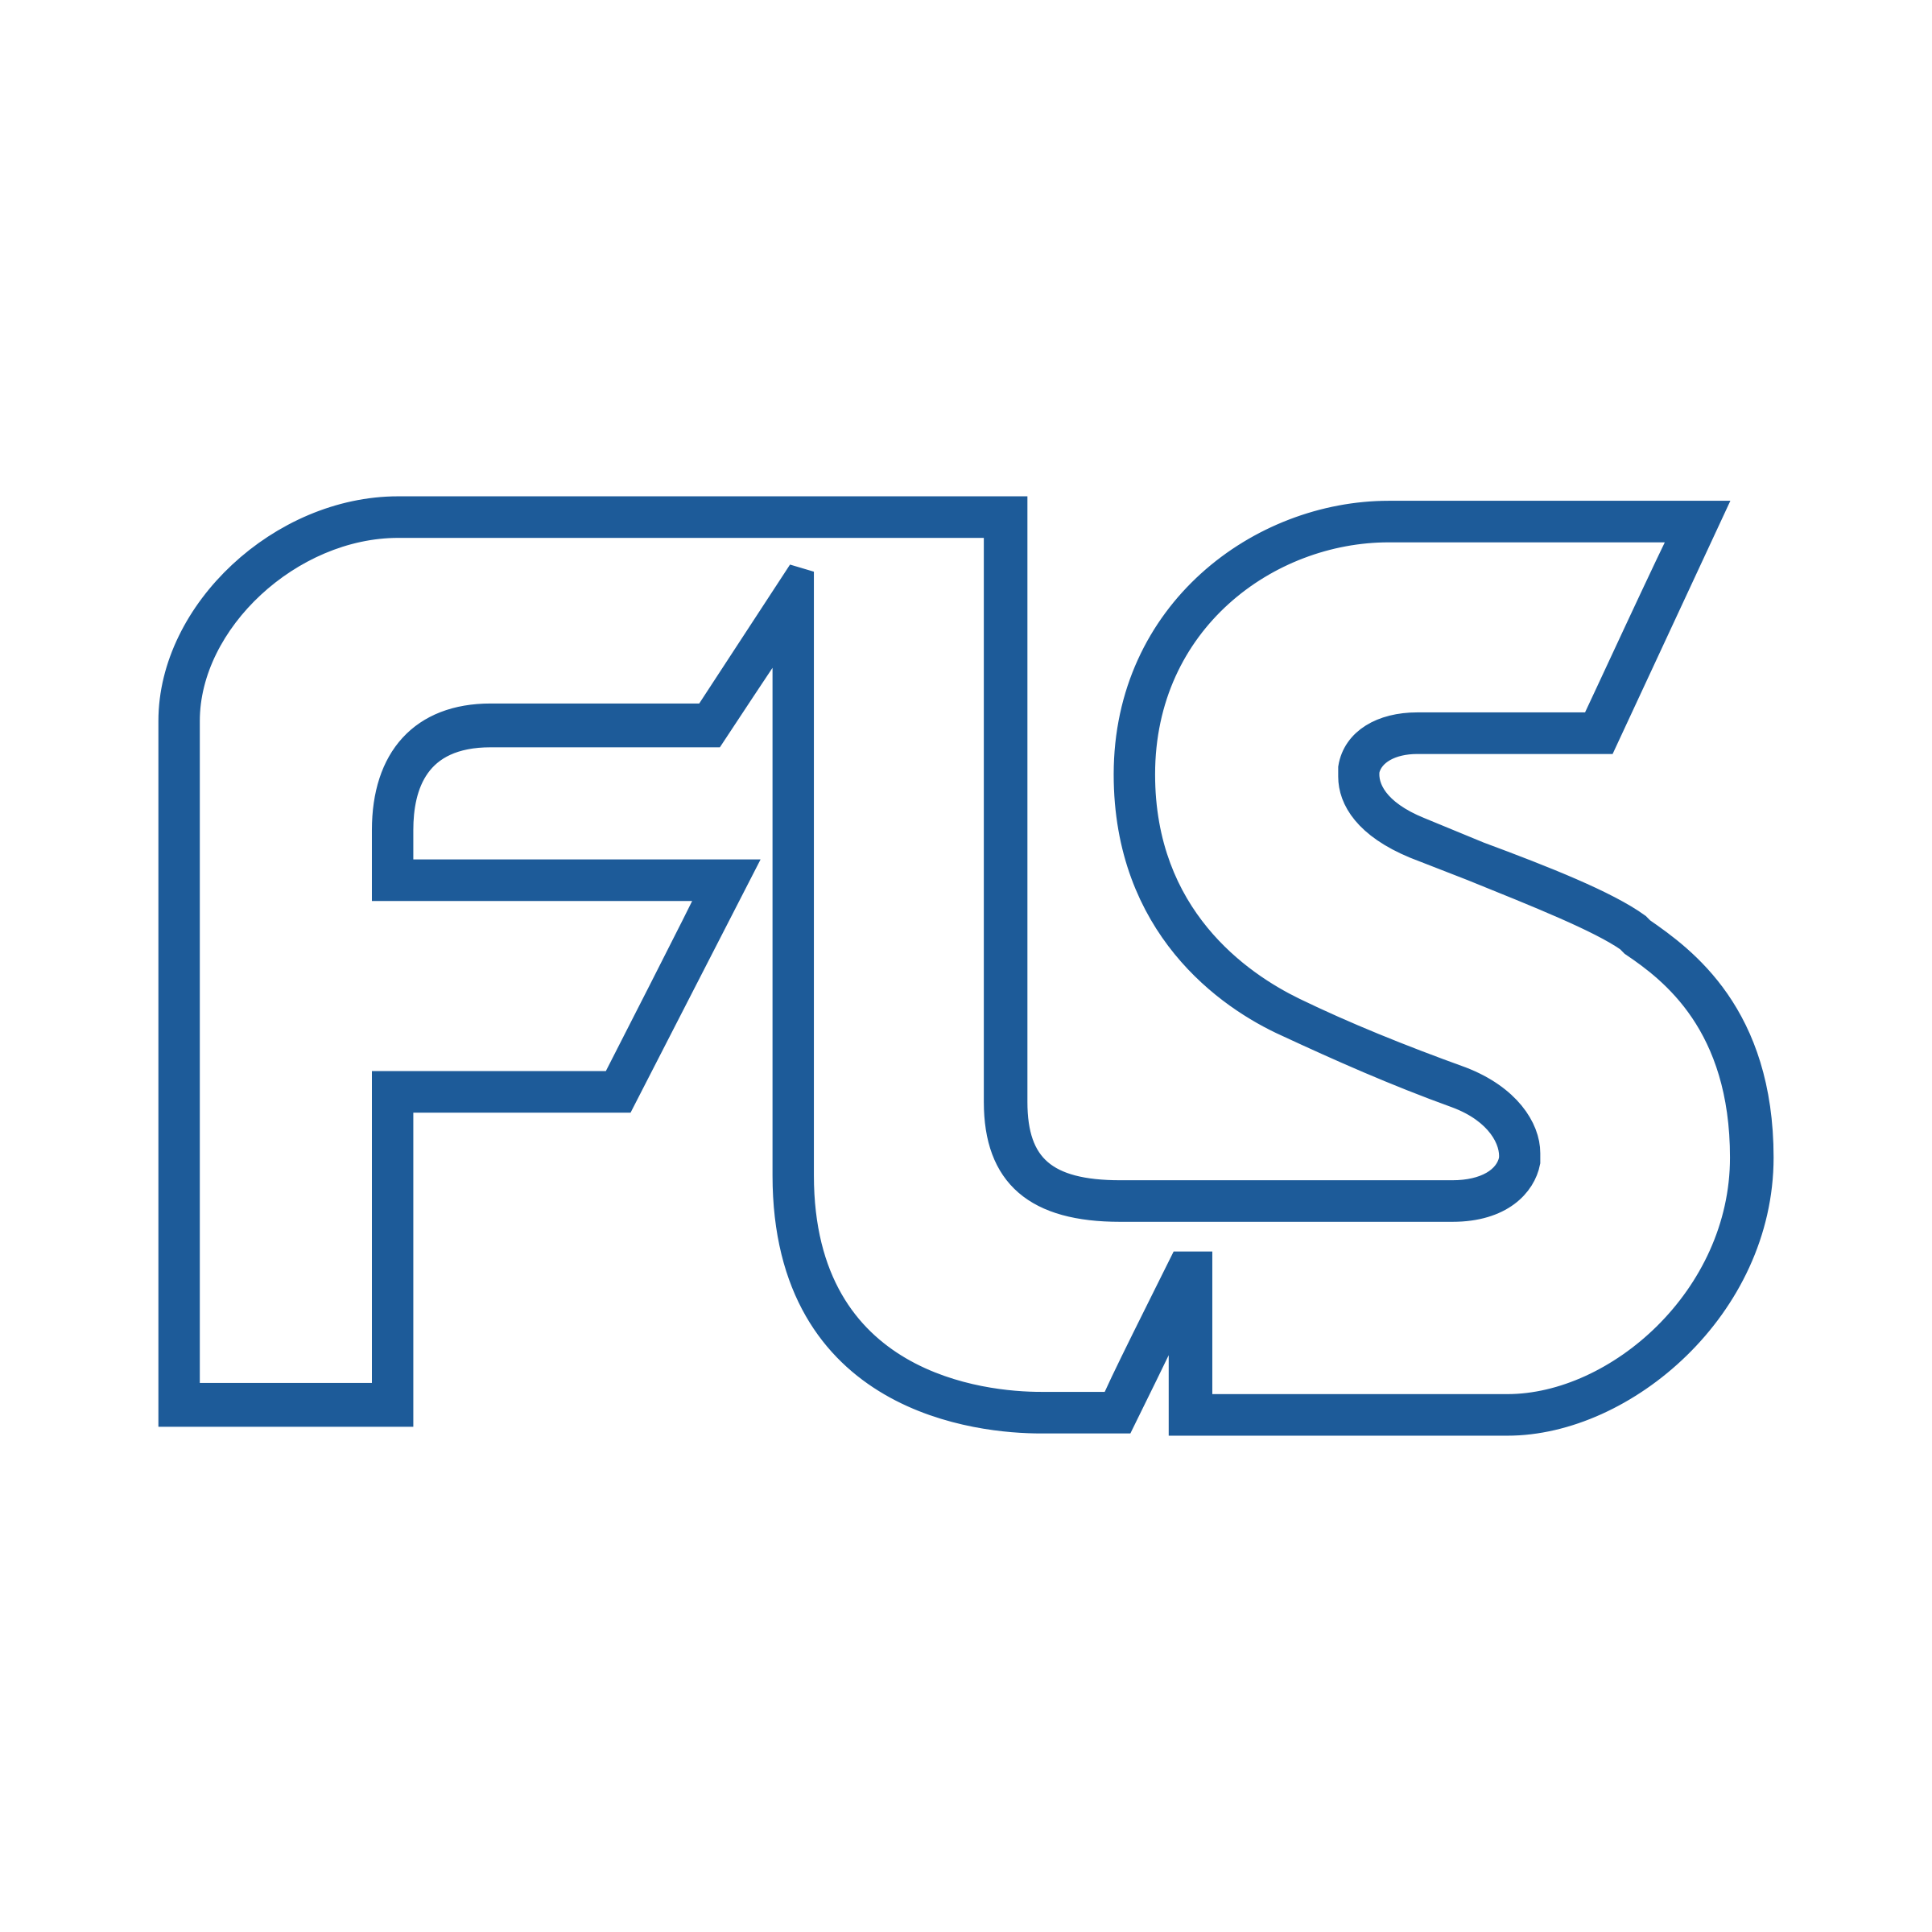 FLS Logo - FLS Industries Logo PNG Transparent & SVG Vector